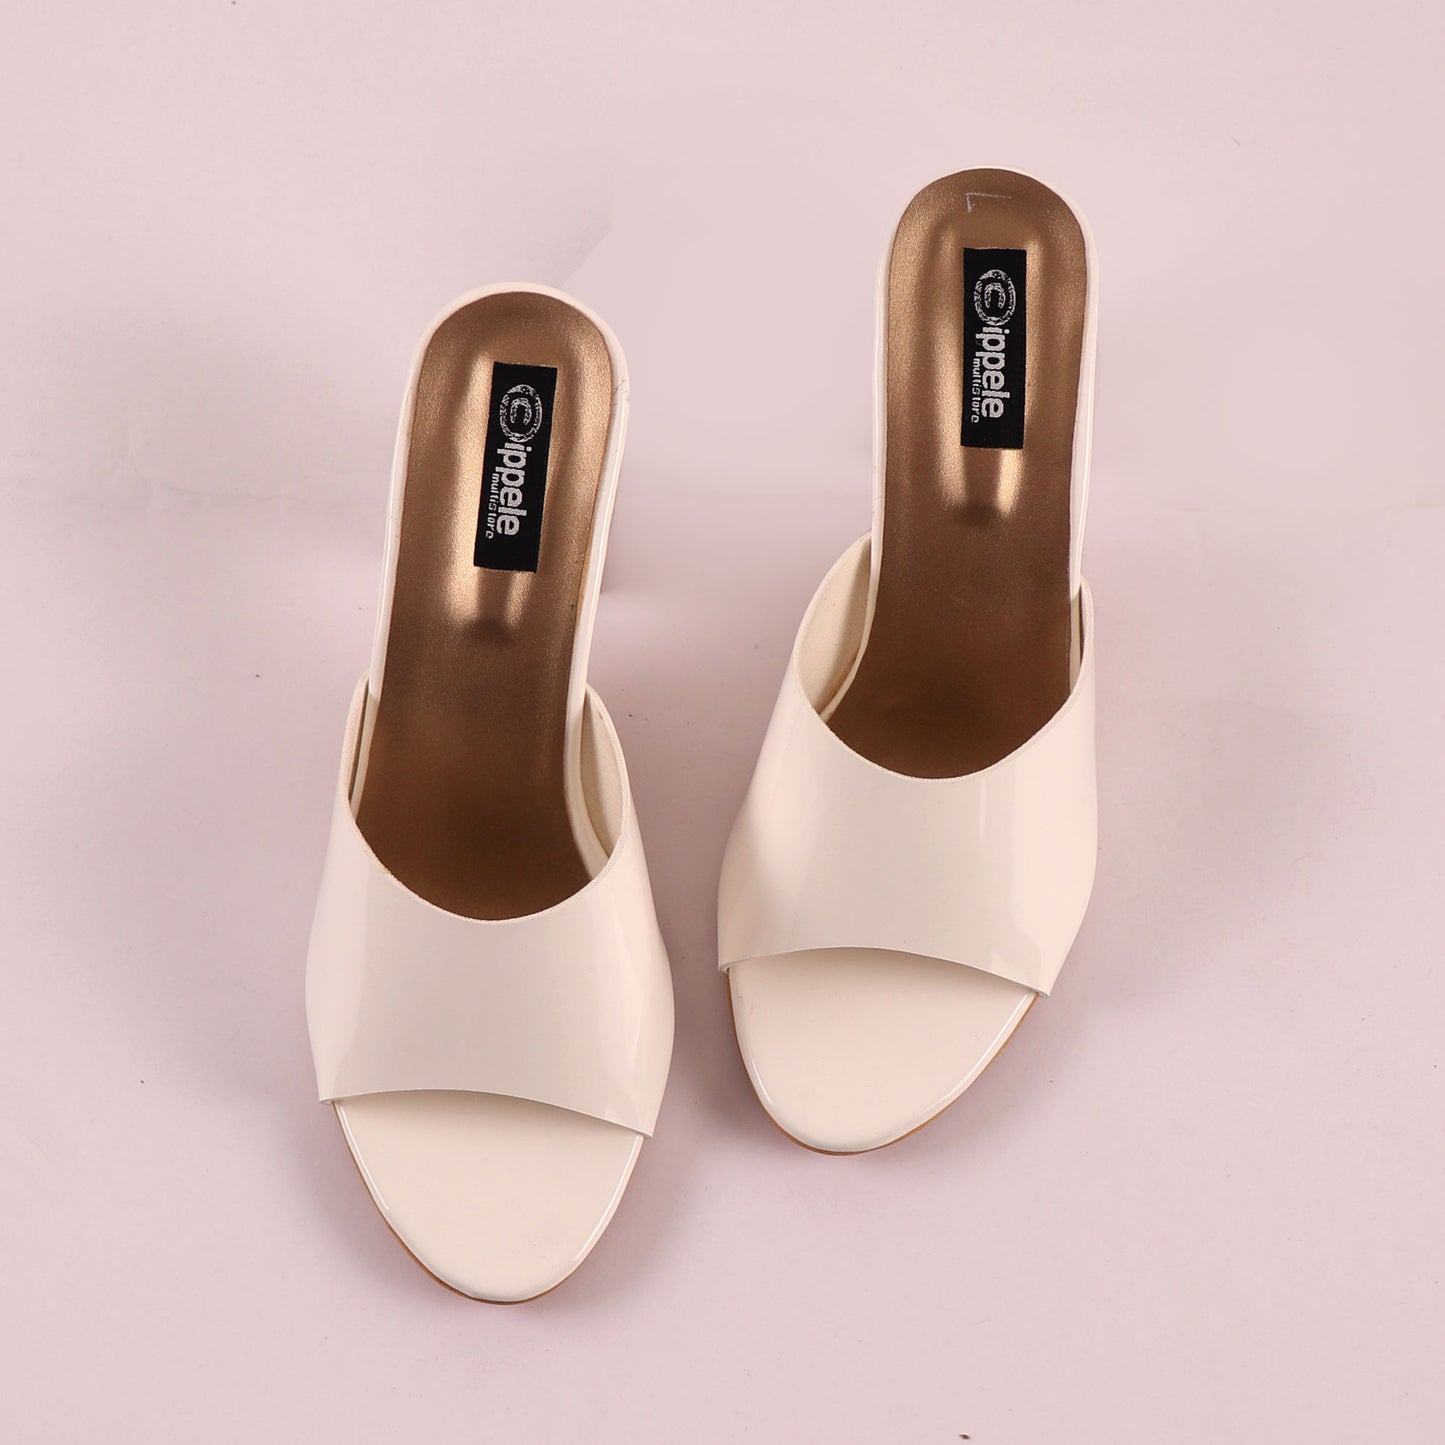 Foot Wear,The Pristine White Block Heel - Cippele Multi Store